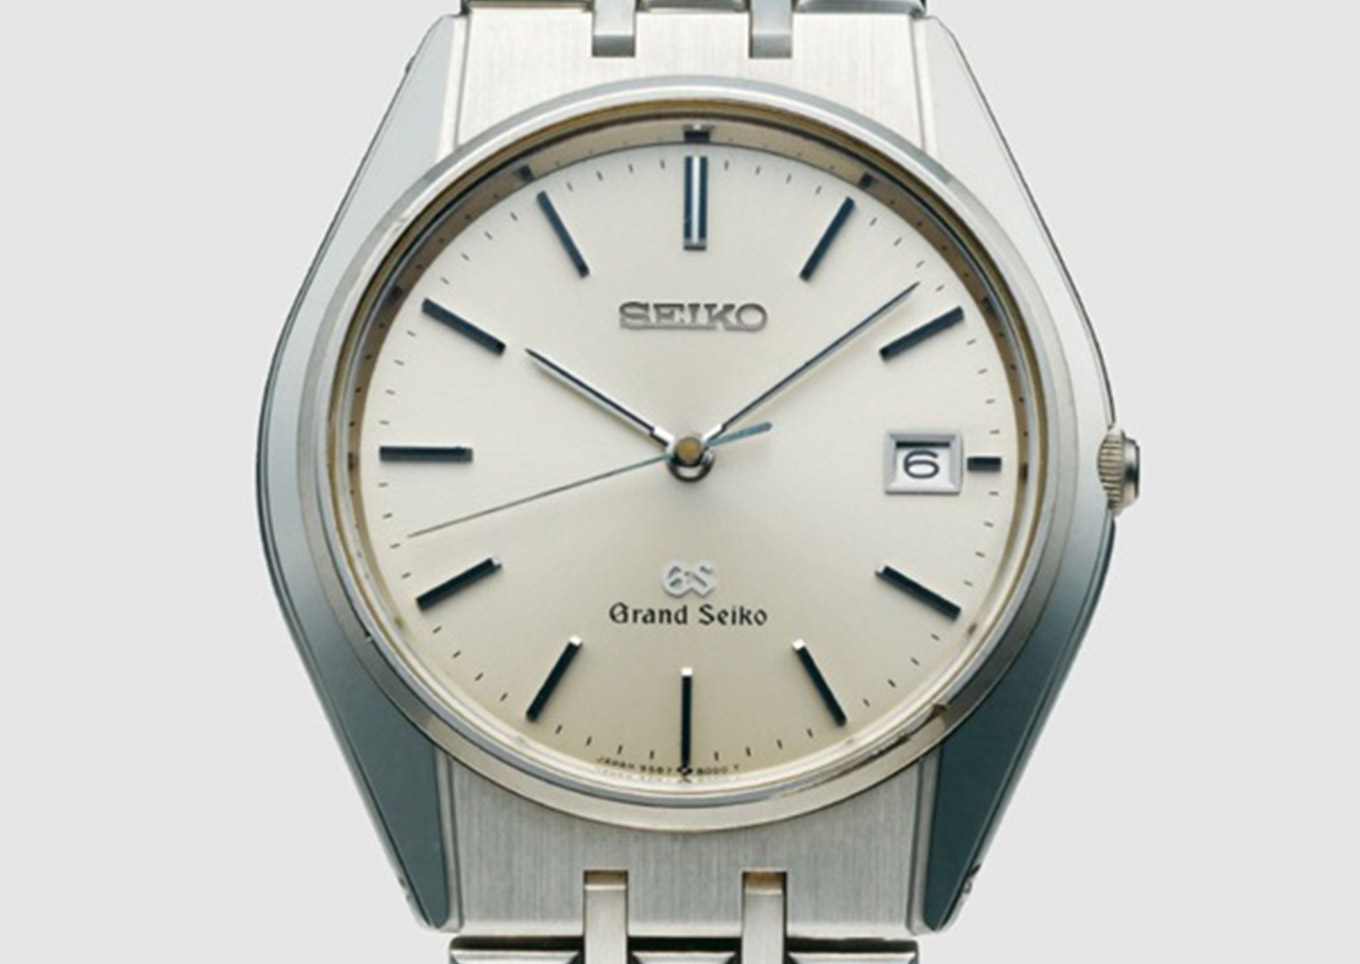 Grand Seiko's first quartz watch